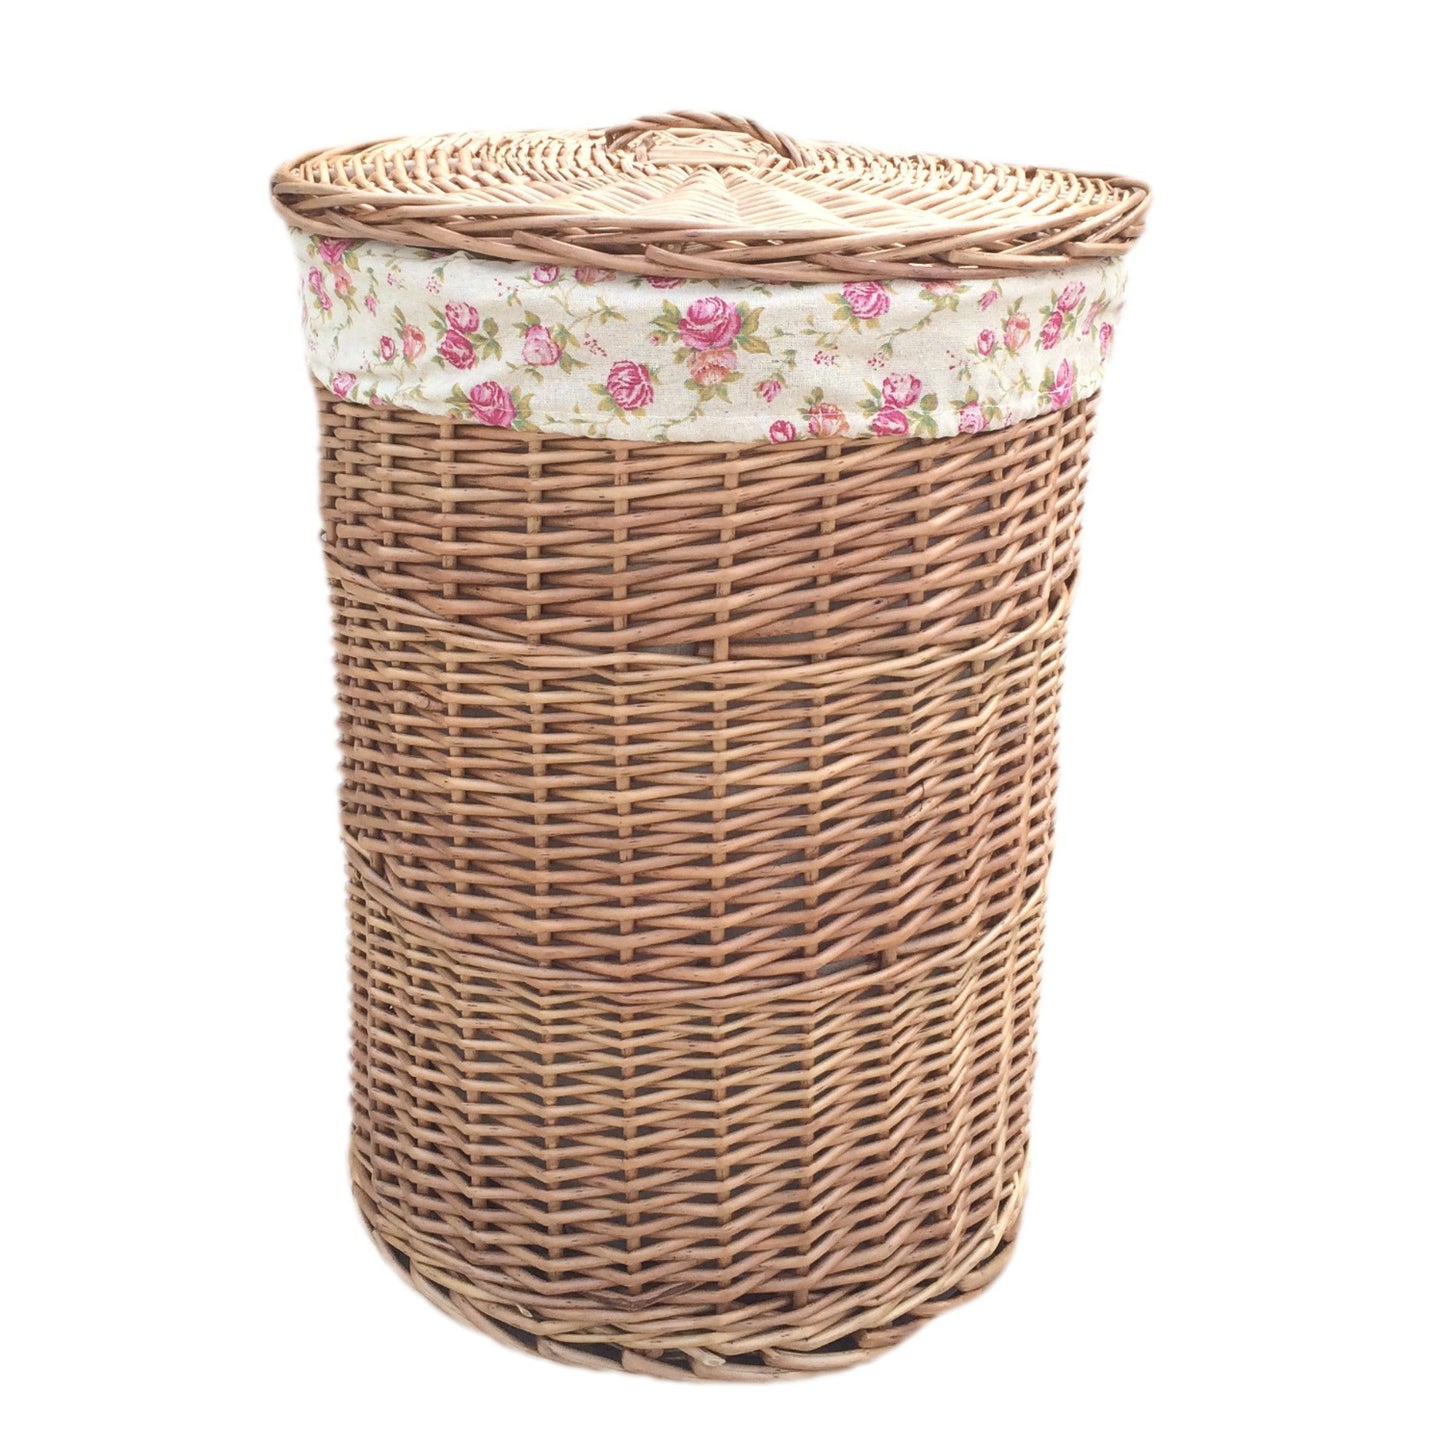 Large Light Steamed Round Linen Basket With Garden Rose Lining